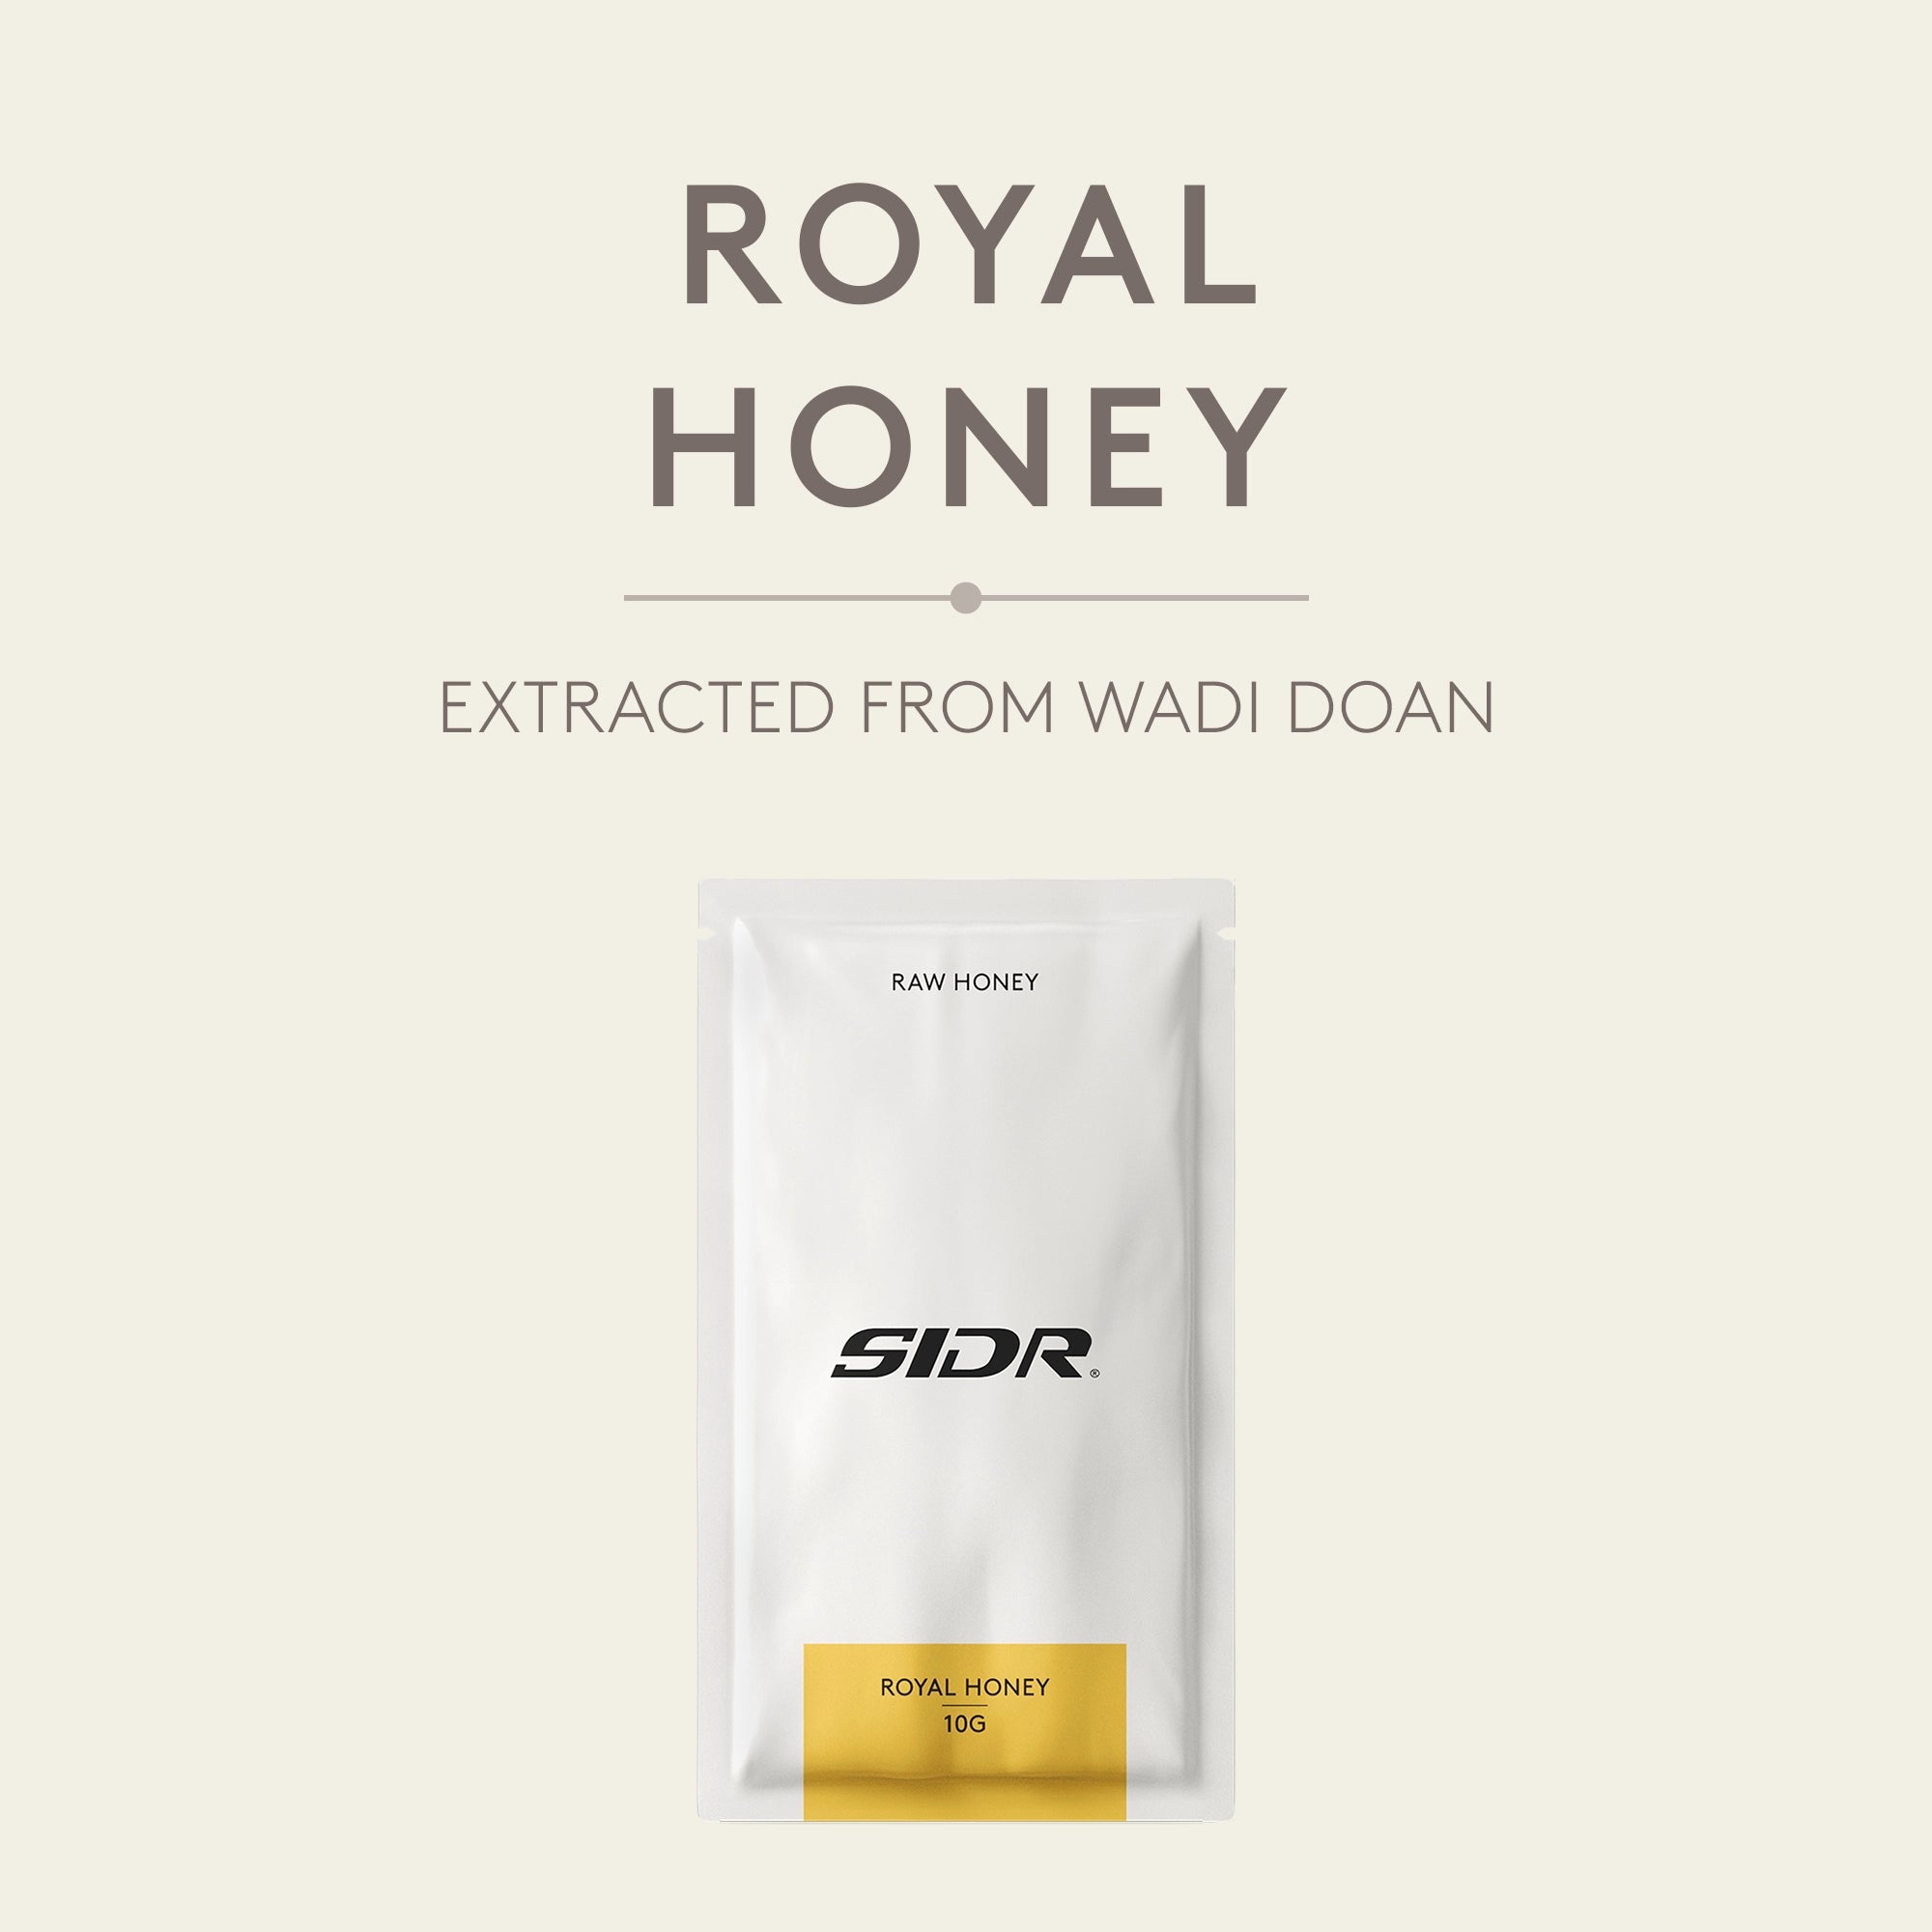 sidr royal honey packet from wadi doan